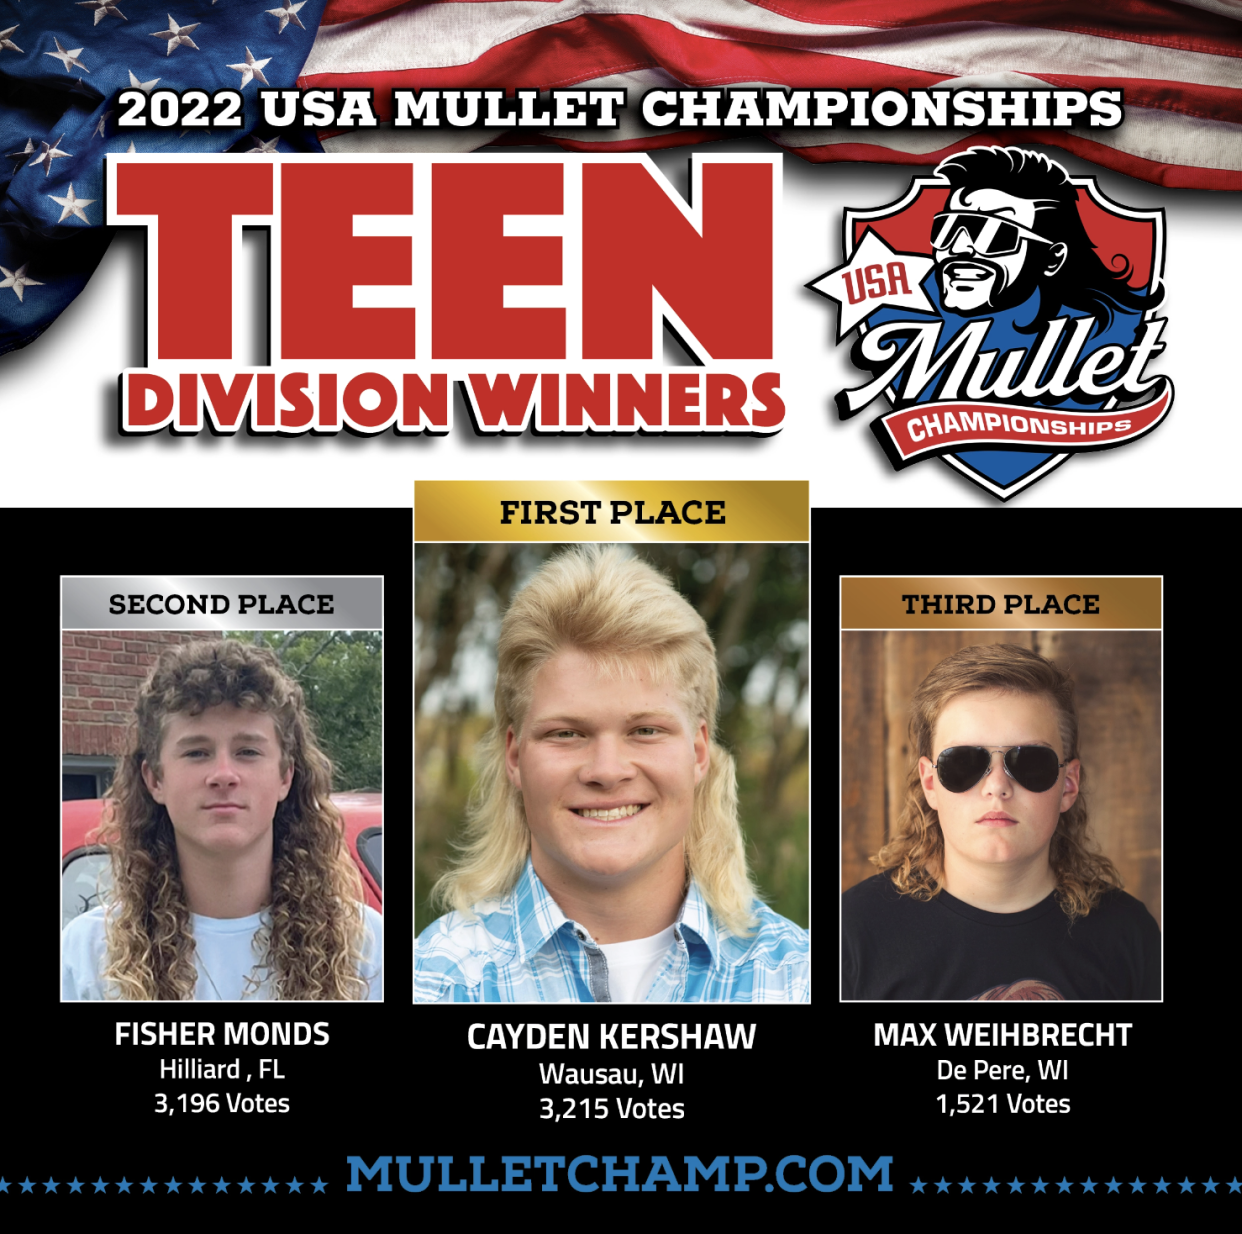 Photo: USA Mullet Championships
